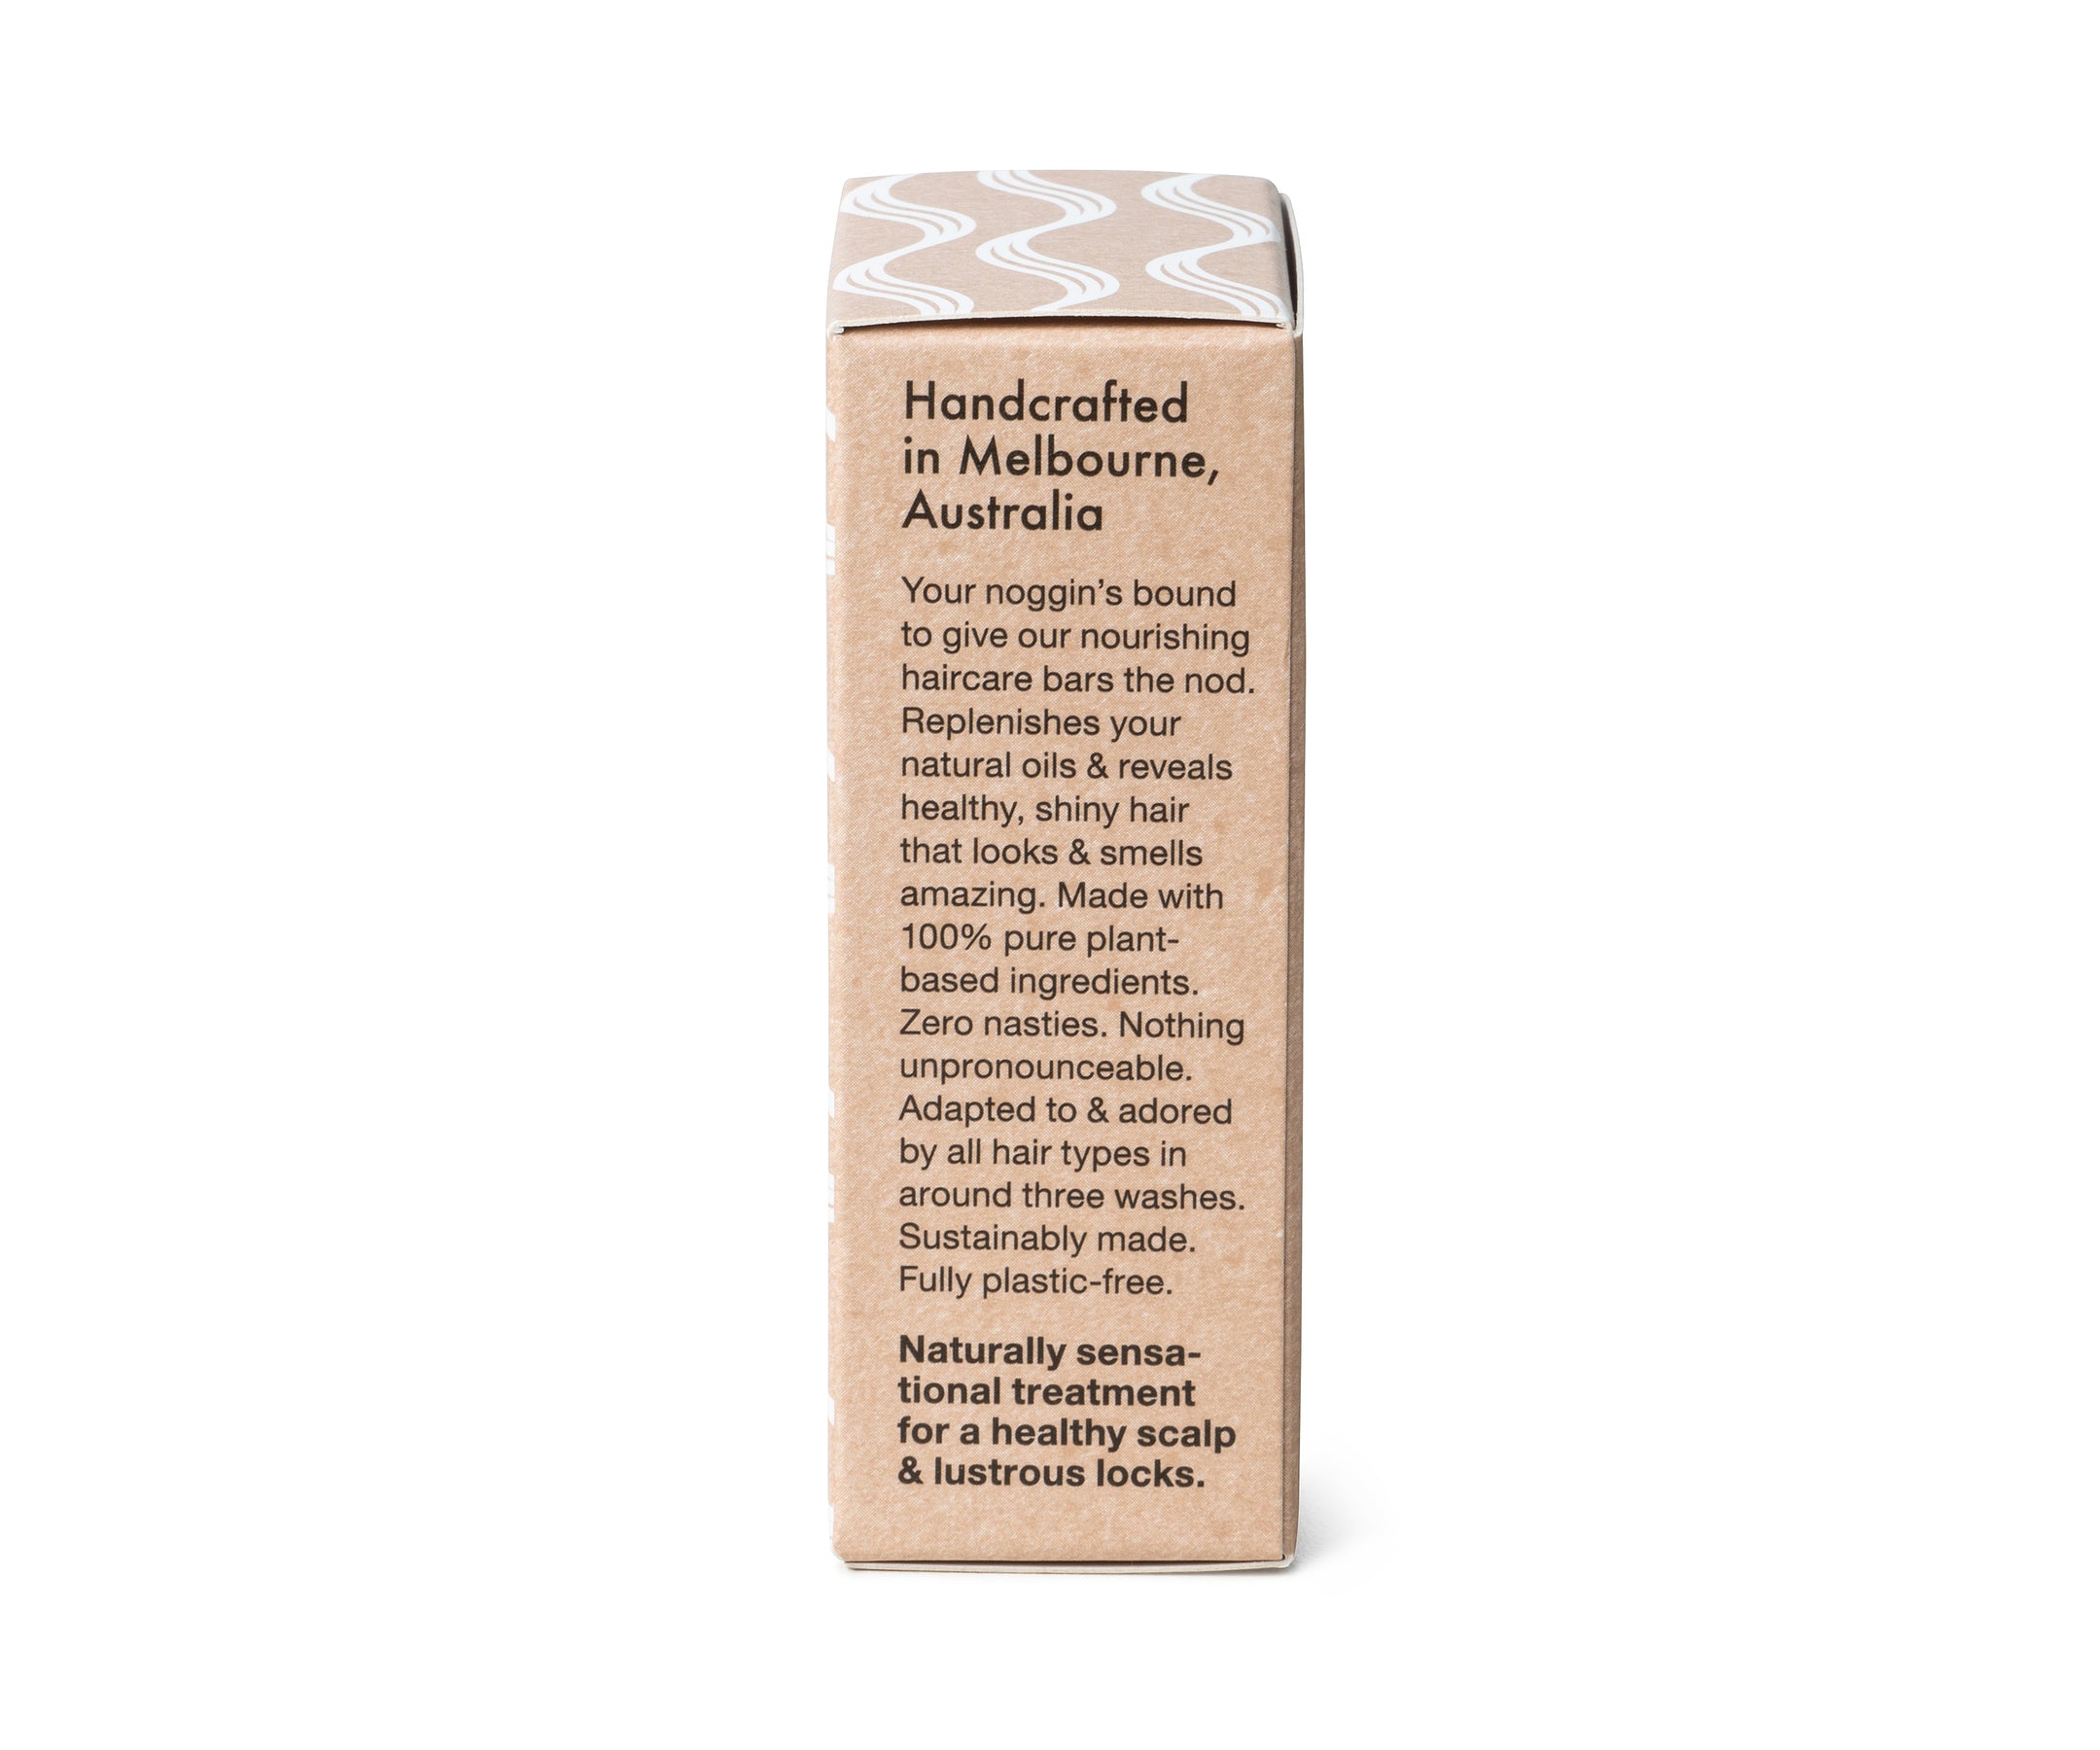 Australian Natural Soap Company handcrafted original shampoo bar right side of box